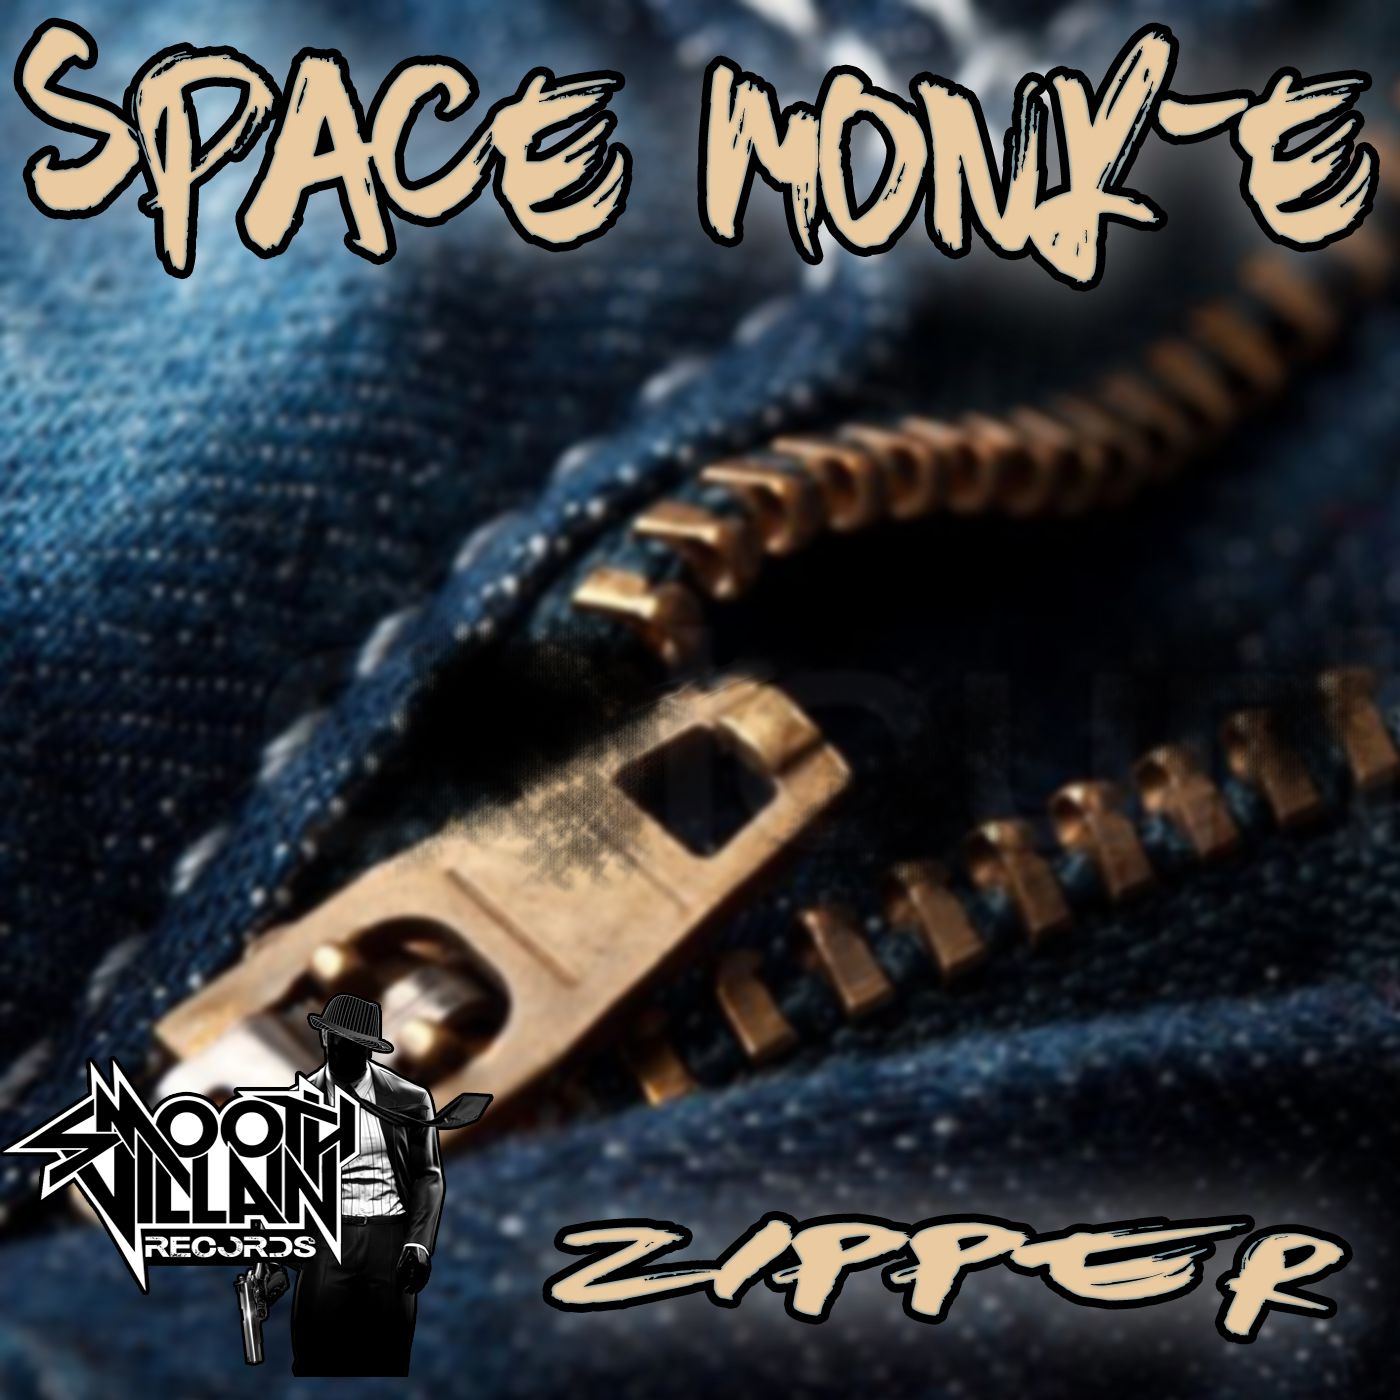 space_monk-e_-_zipper.jpg